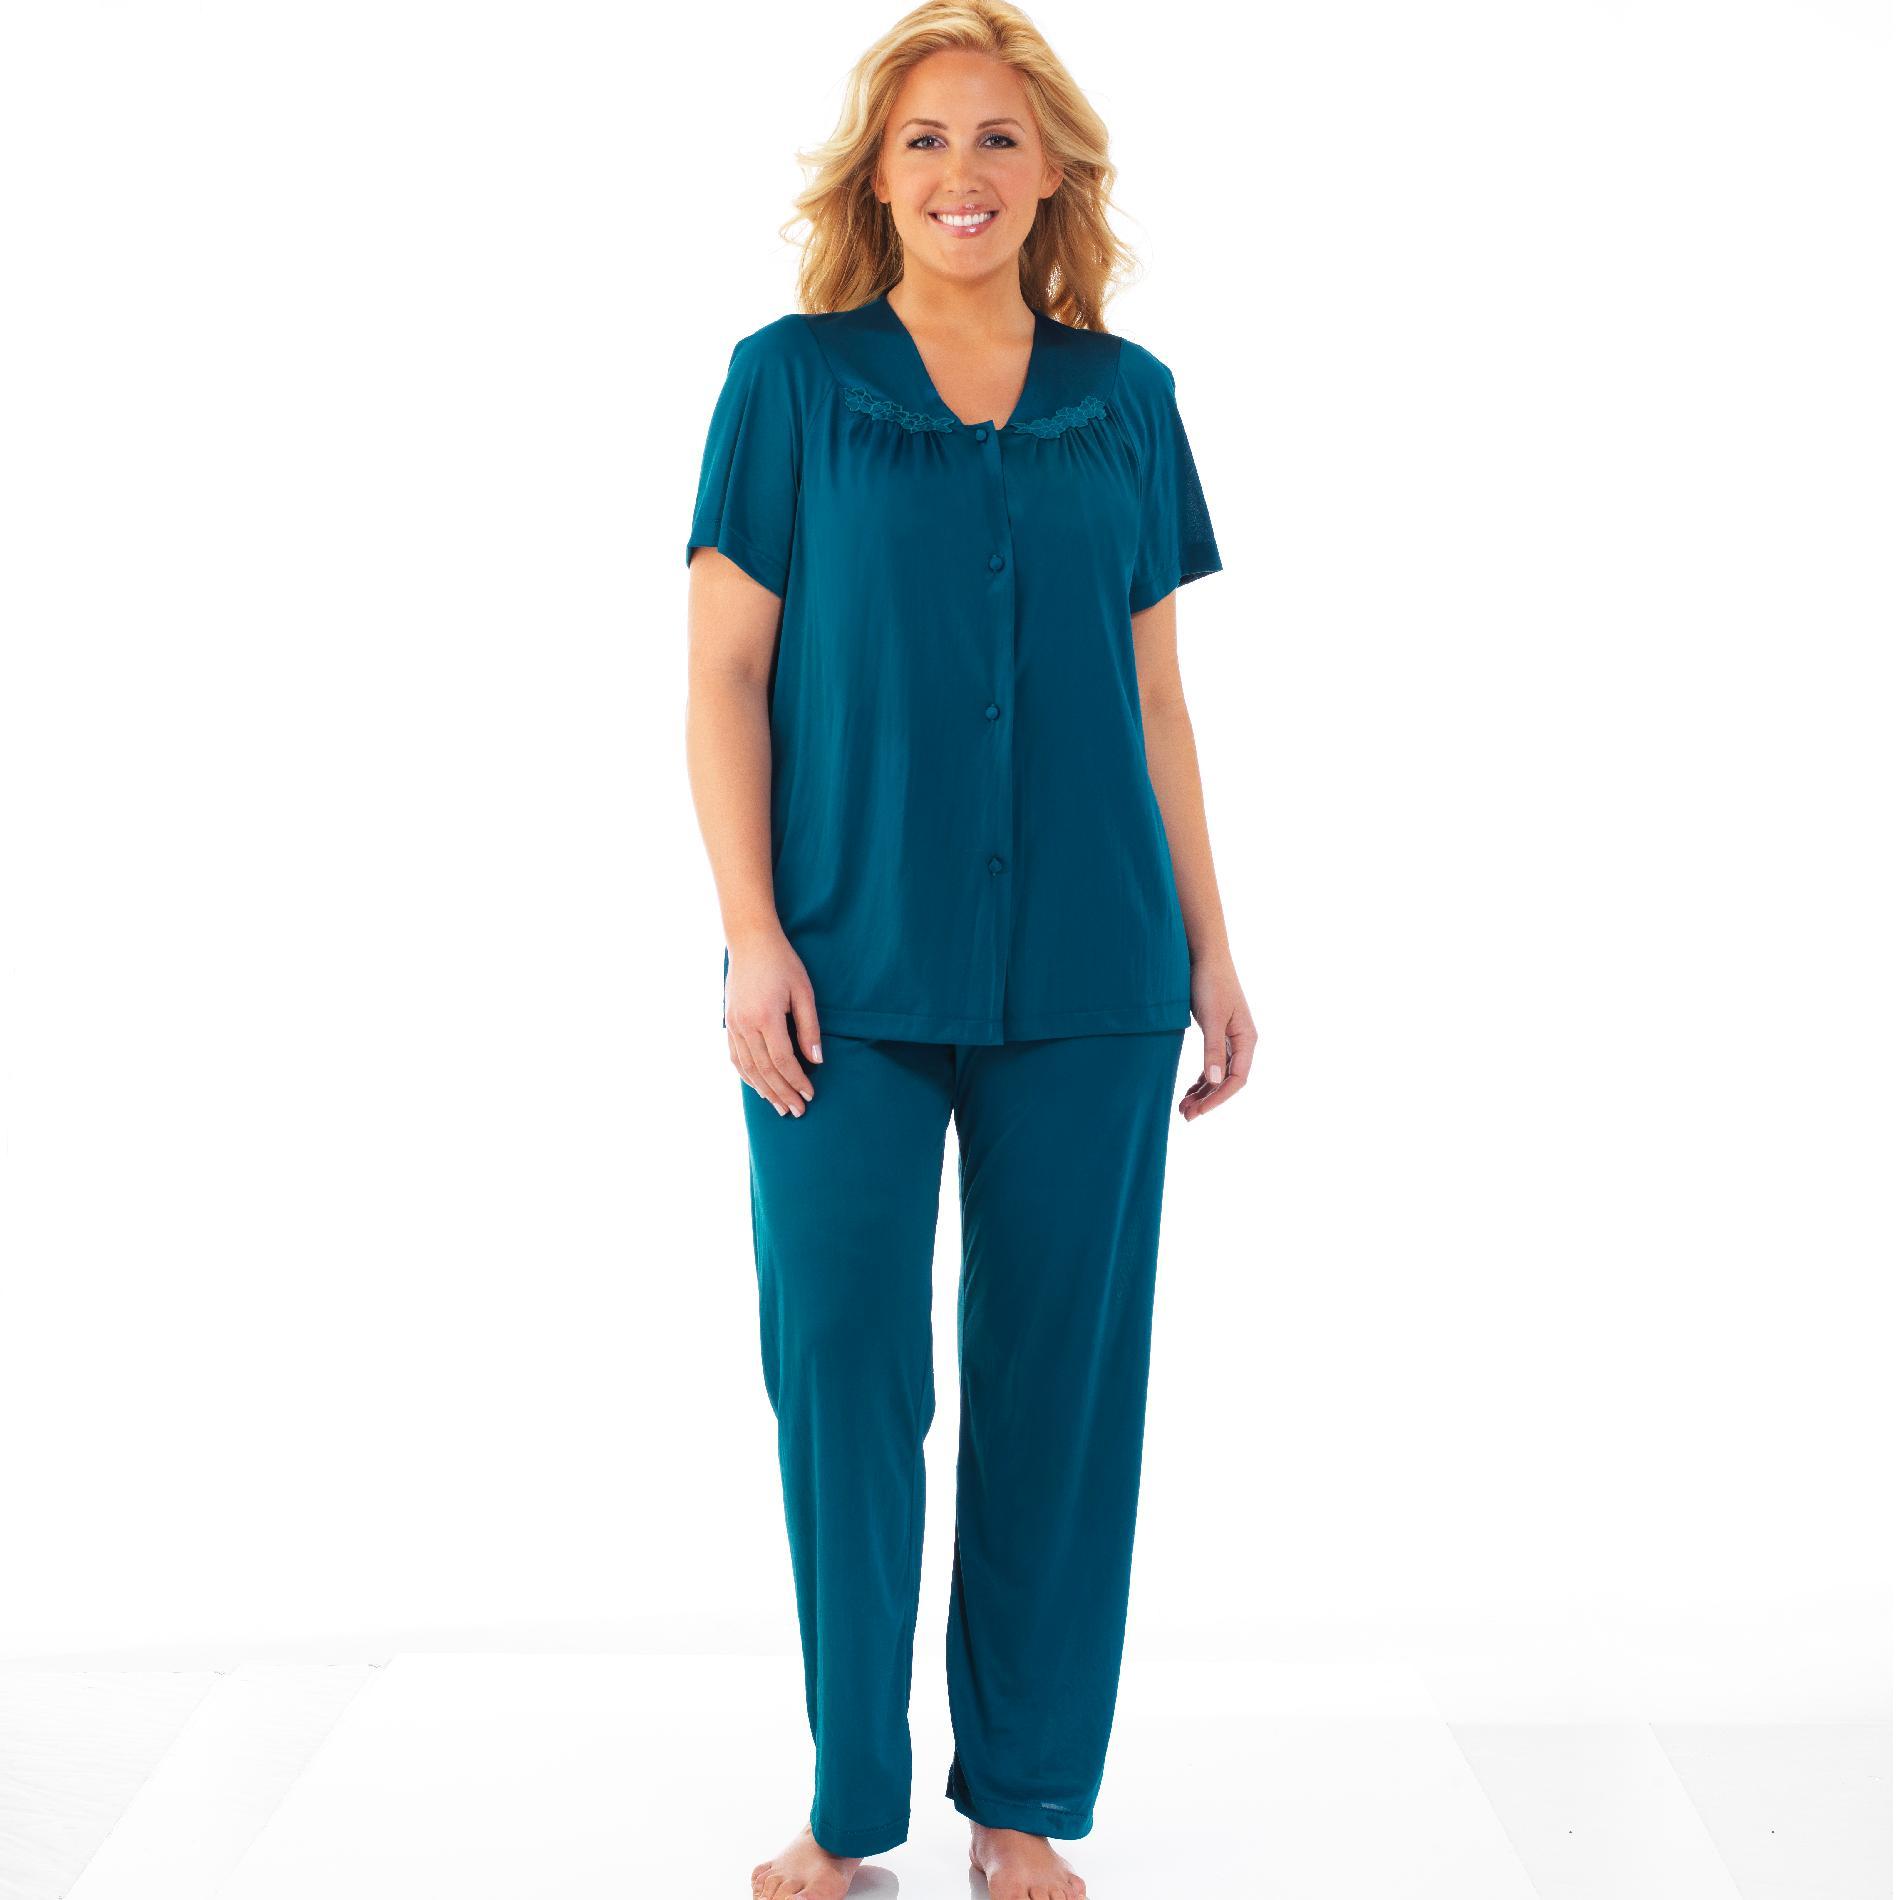 Women's Vanity Fair Colortura Short Sleeve Pajama Set